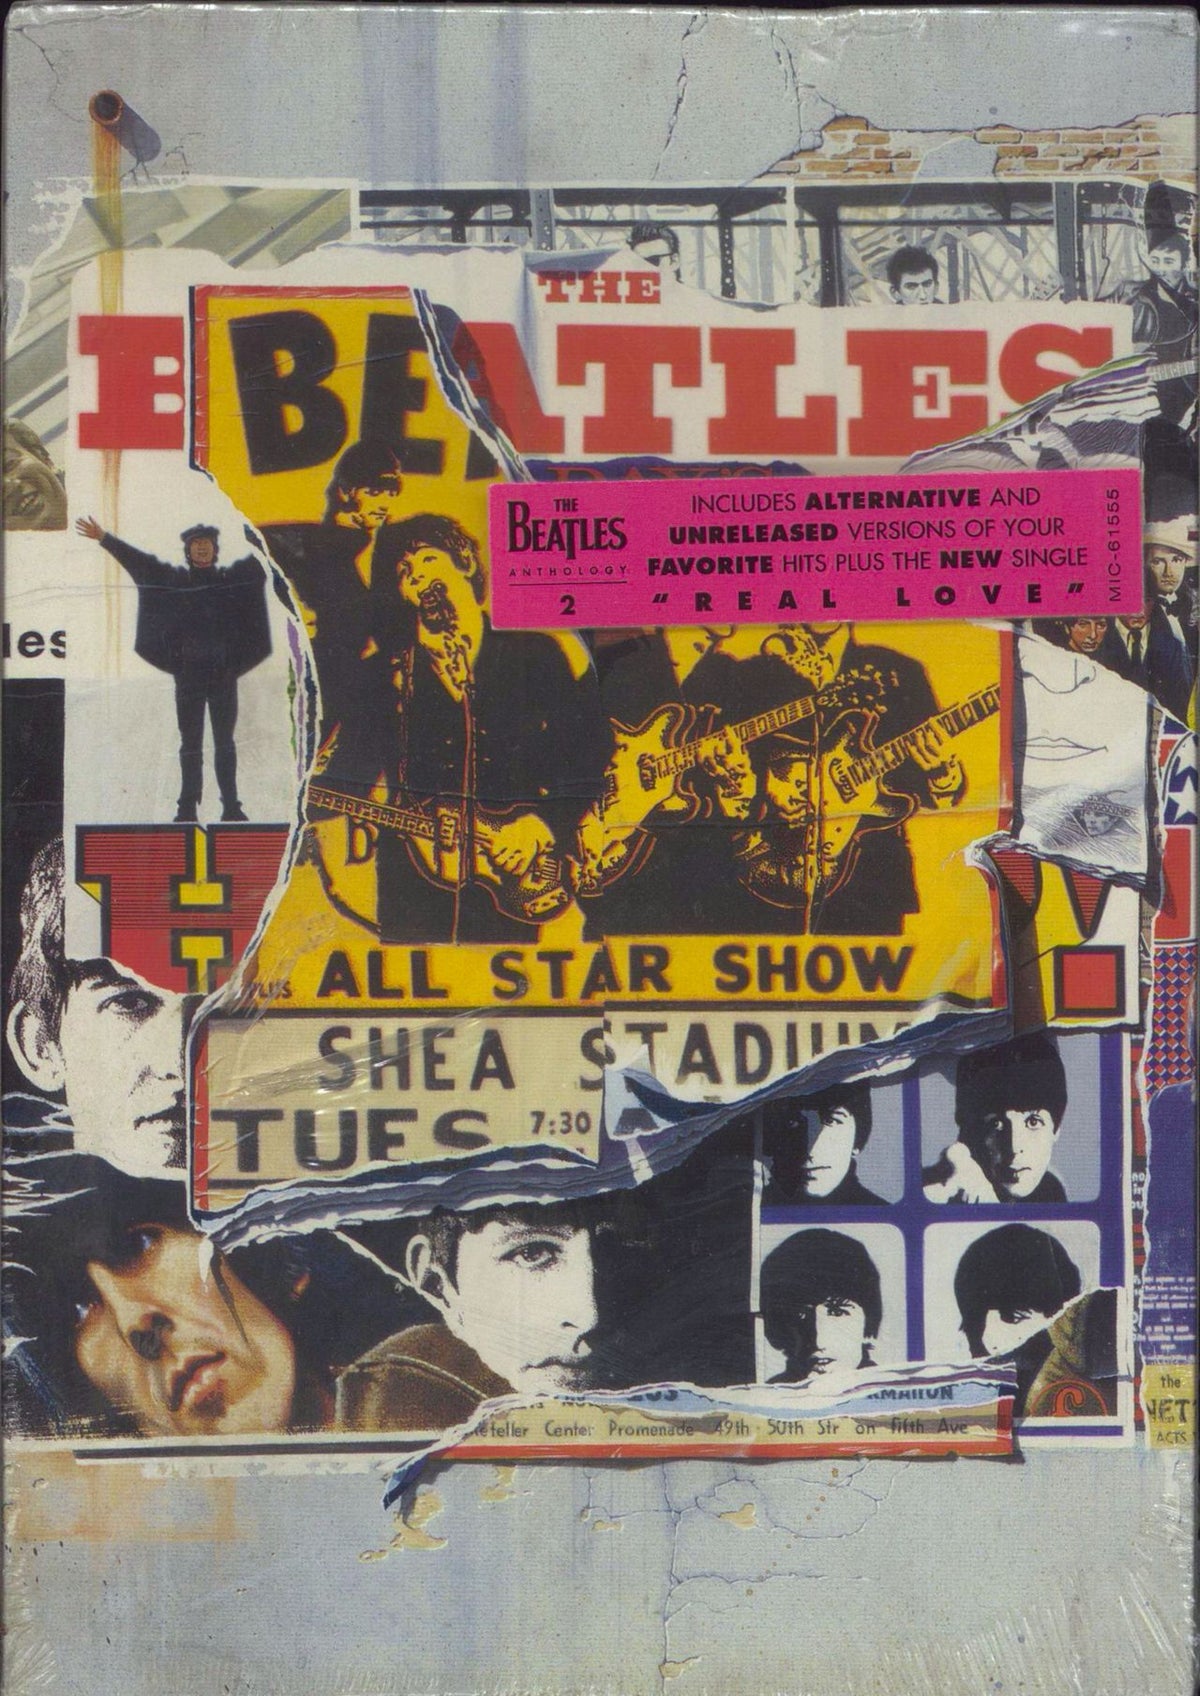 Two of Us  Beatles albums, The beatles, Beatles singles